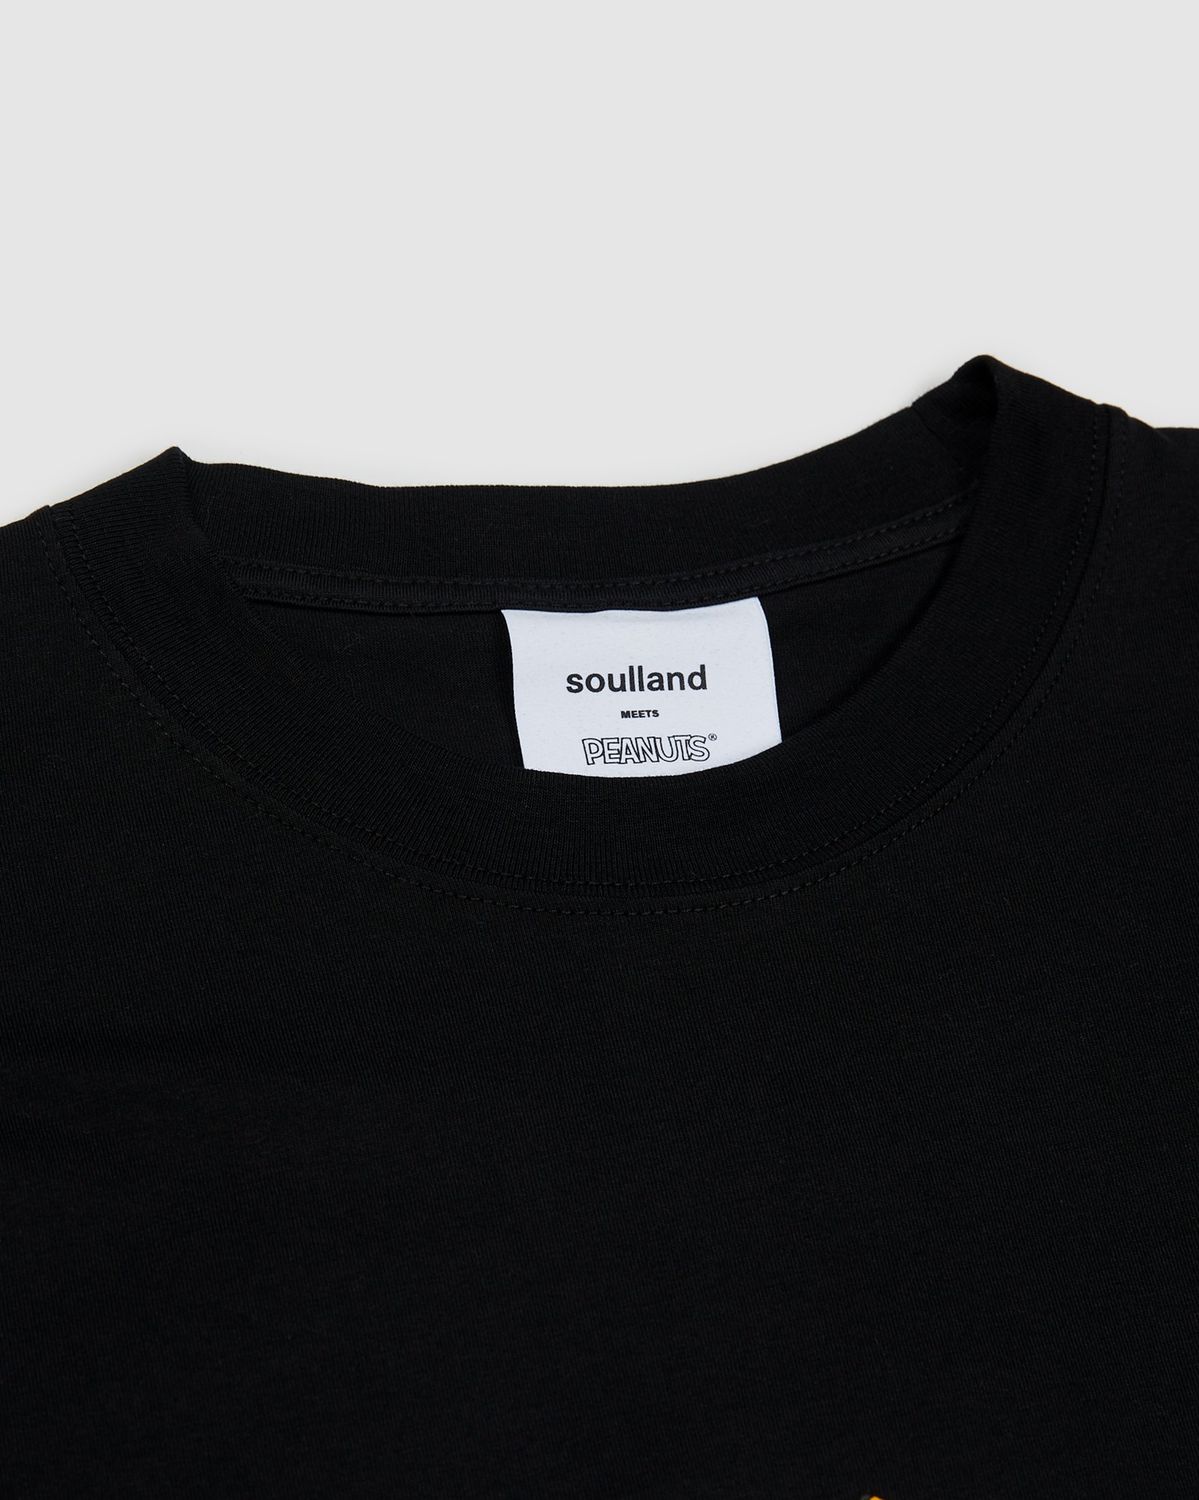 Colette Mon Amour x Soulland – Snoopy Bed Black T-Shirt - T-Shirts - Black - Image 3